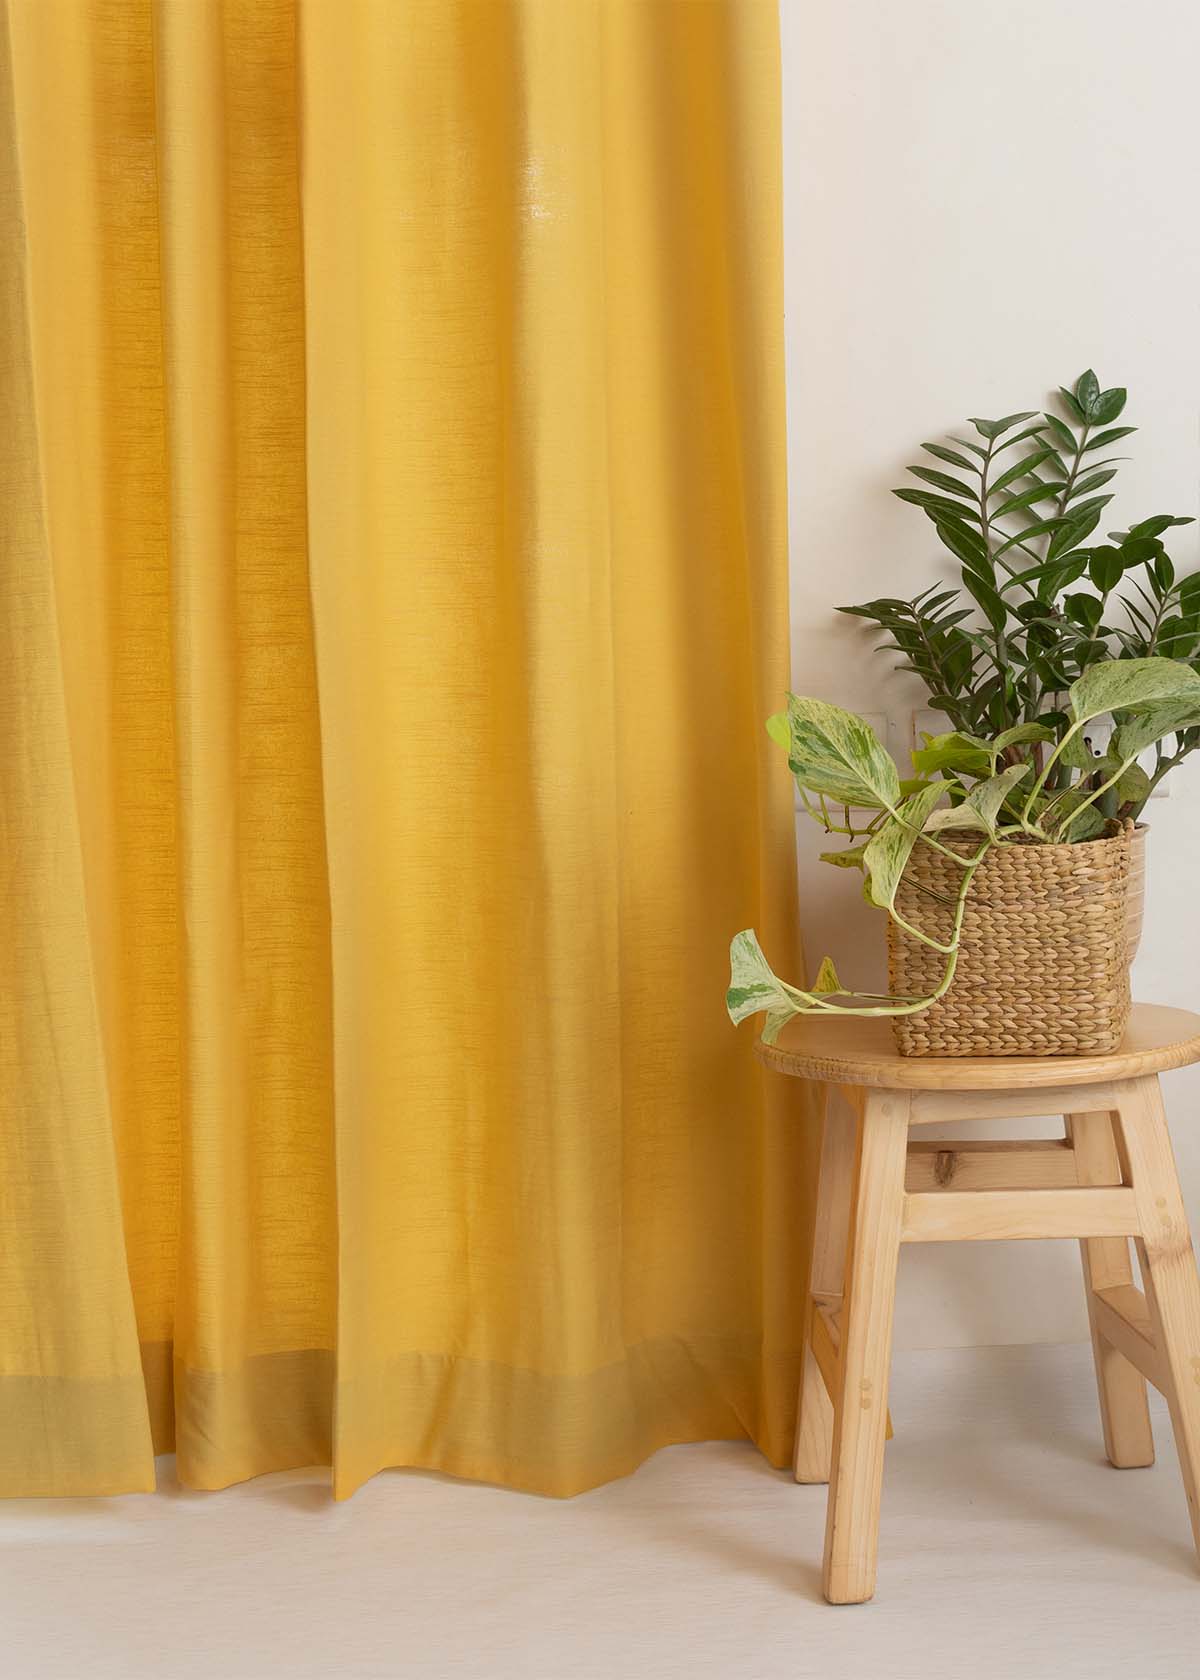 Solid Mustard 100% Customizable Cotton plain curtain for bedroom - Room darkening